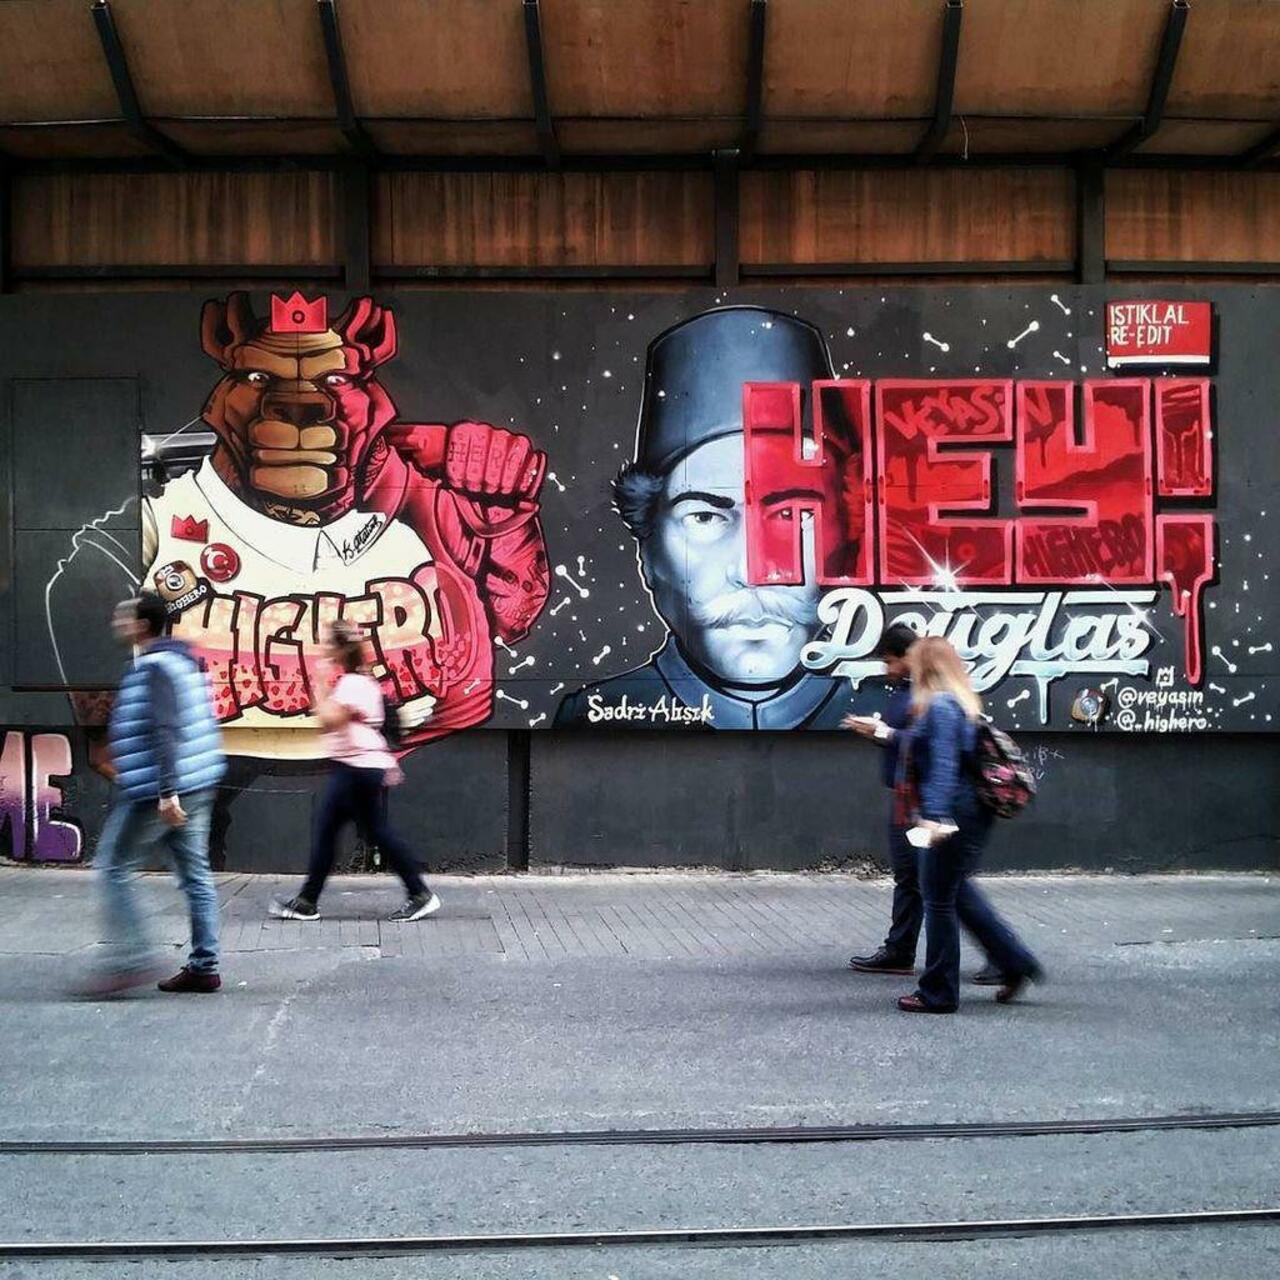 RT @StArtEverywhere: Istiklal Re-Edit! 
#iyiakşamlar #graffiti #highero #veyasin #streetart #urbanart #sprayart #streetphotography #w… https://t.co/U5CZxRNsP0